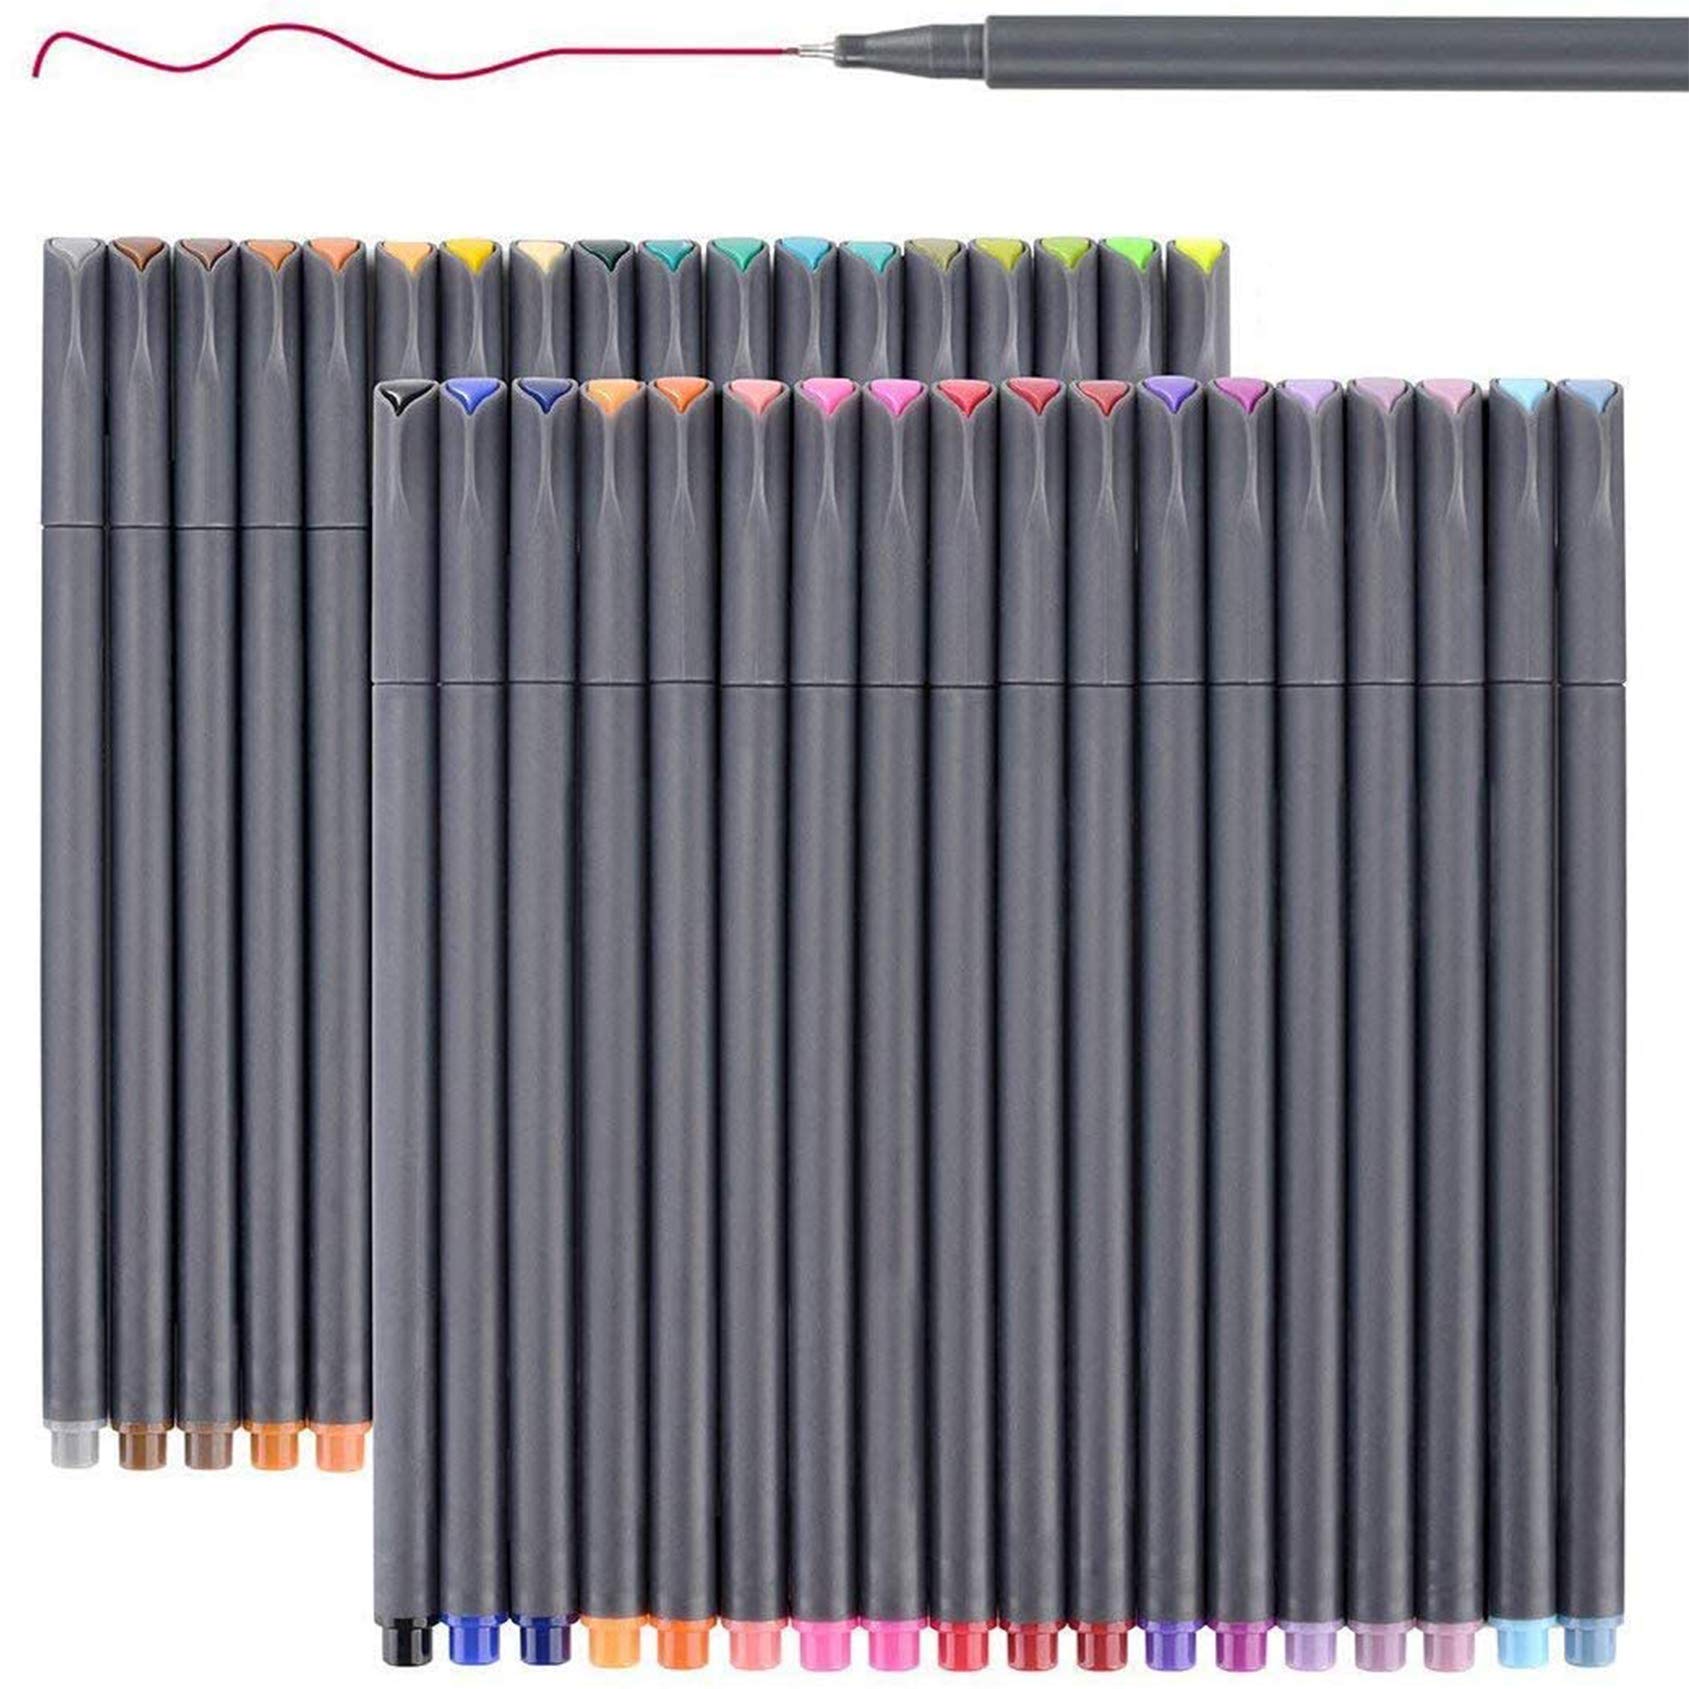 Coloured Gel Pens for Journaling, Planner, Journal, Diary